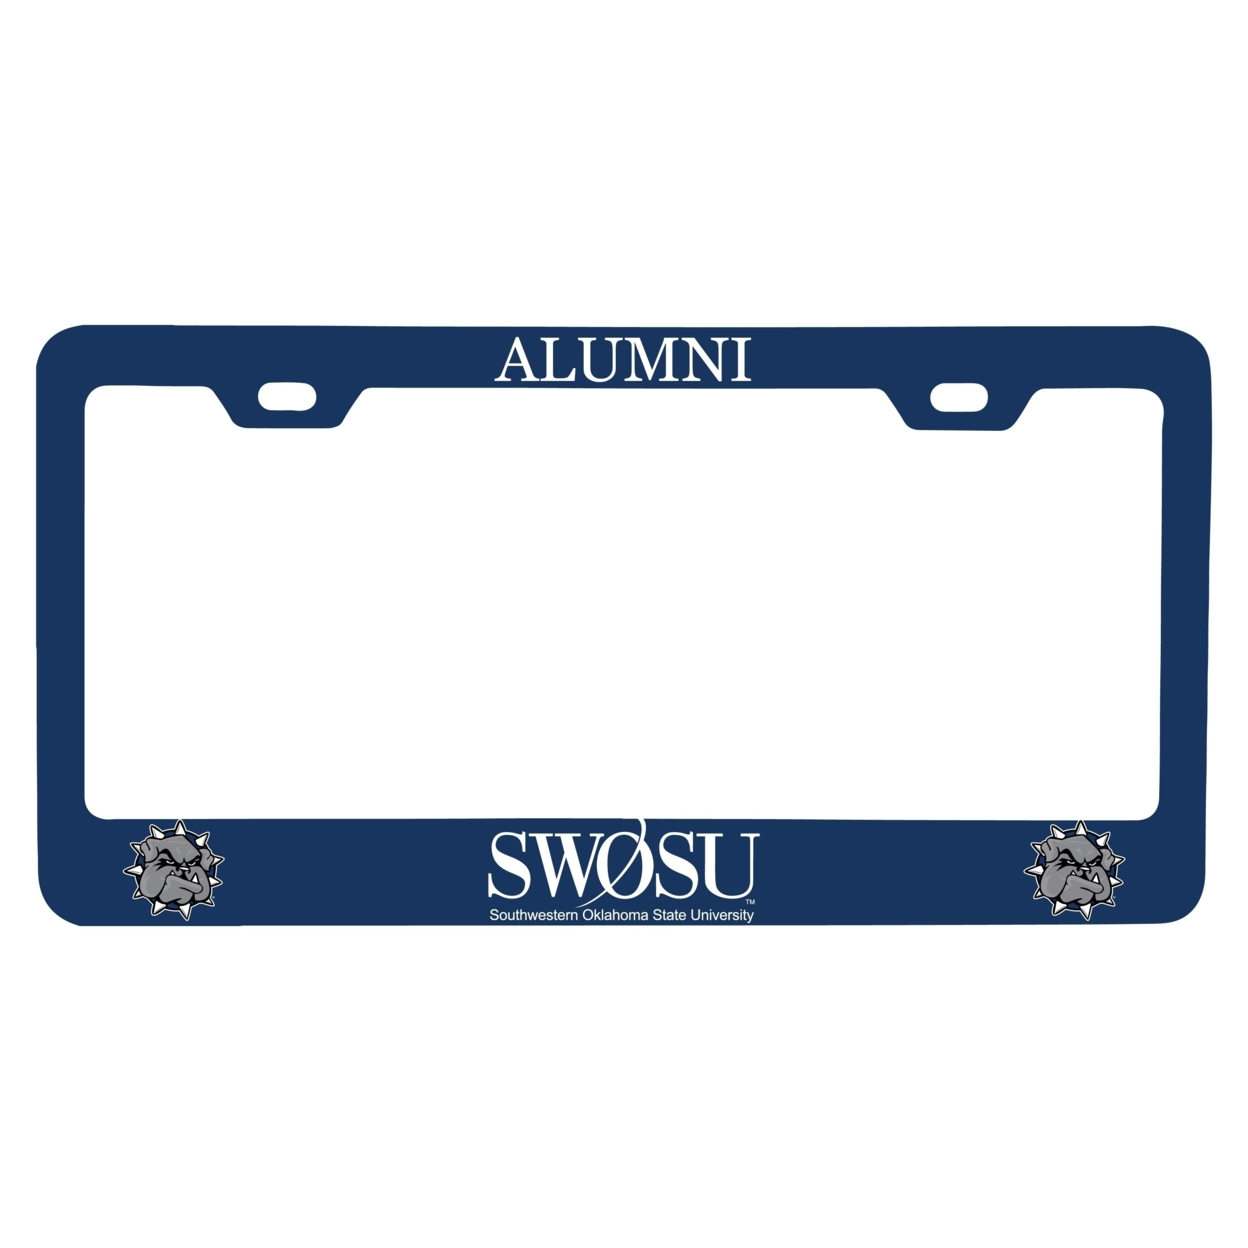 Southwestern Oklahoma State University Alumni License Plate Frame